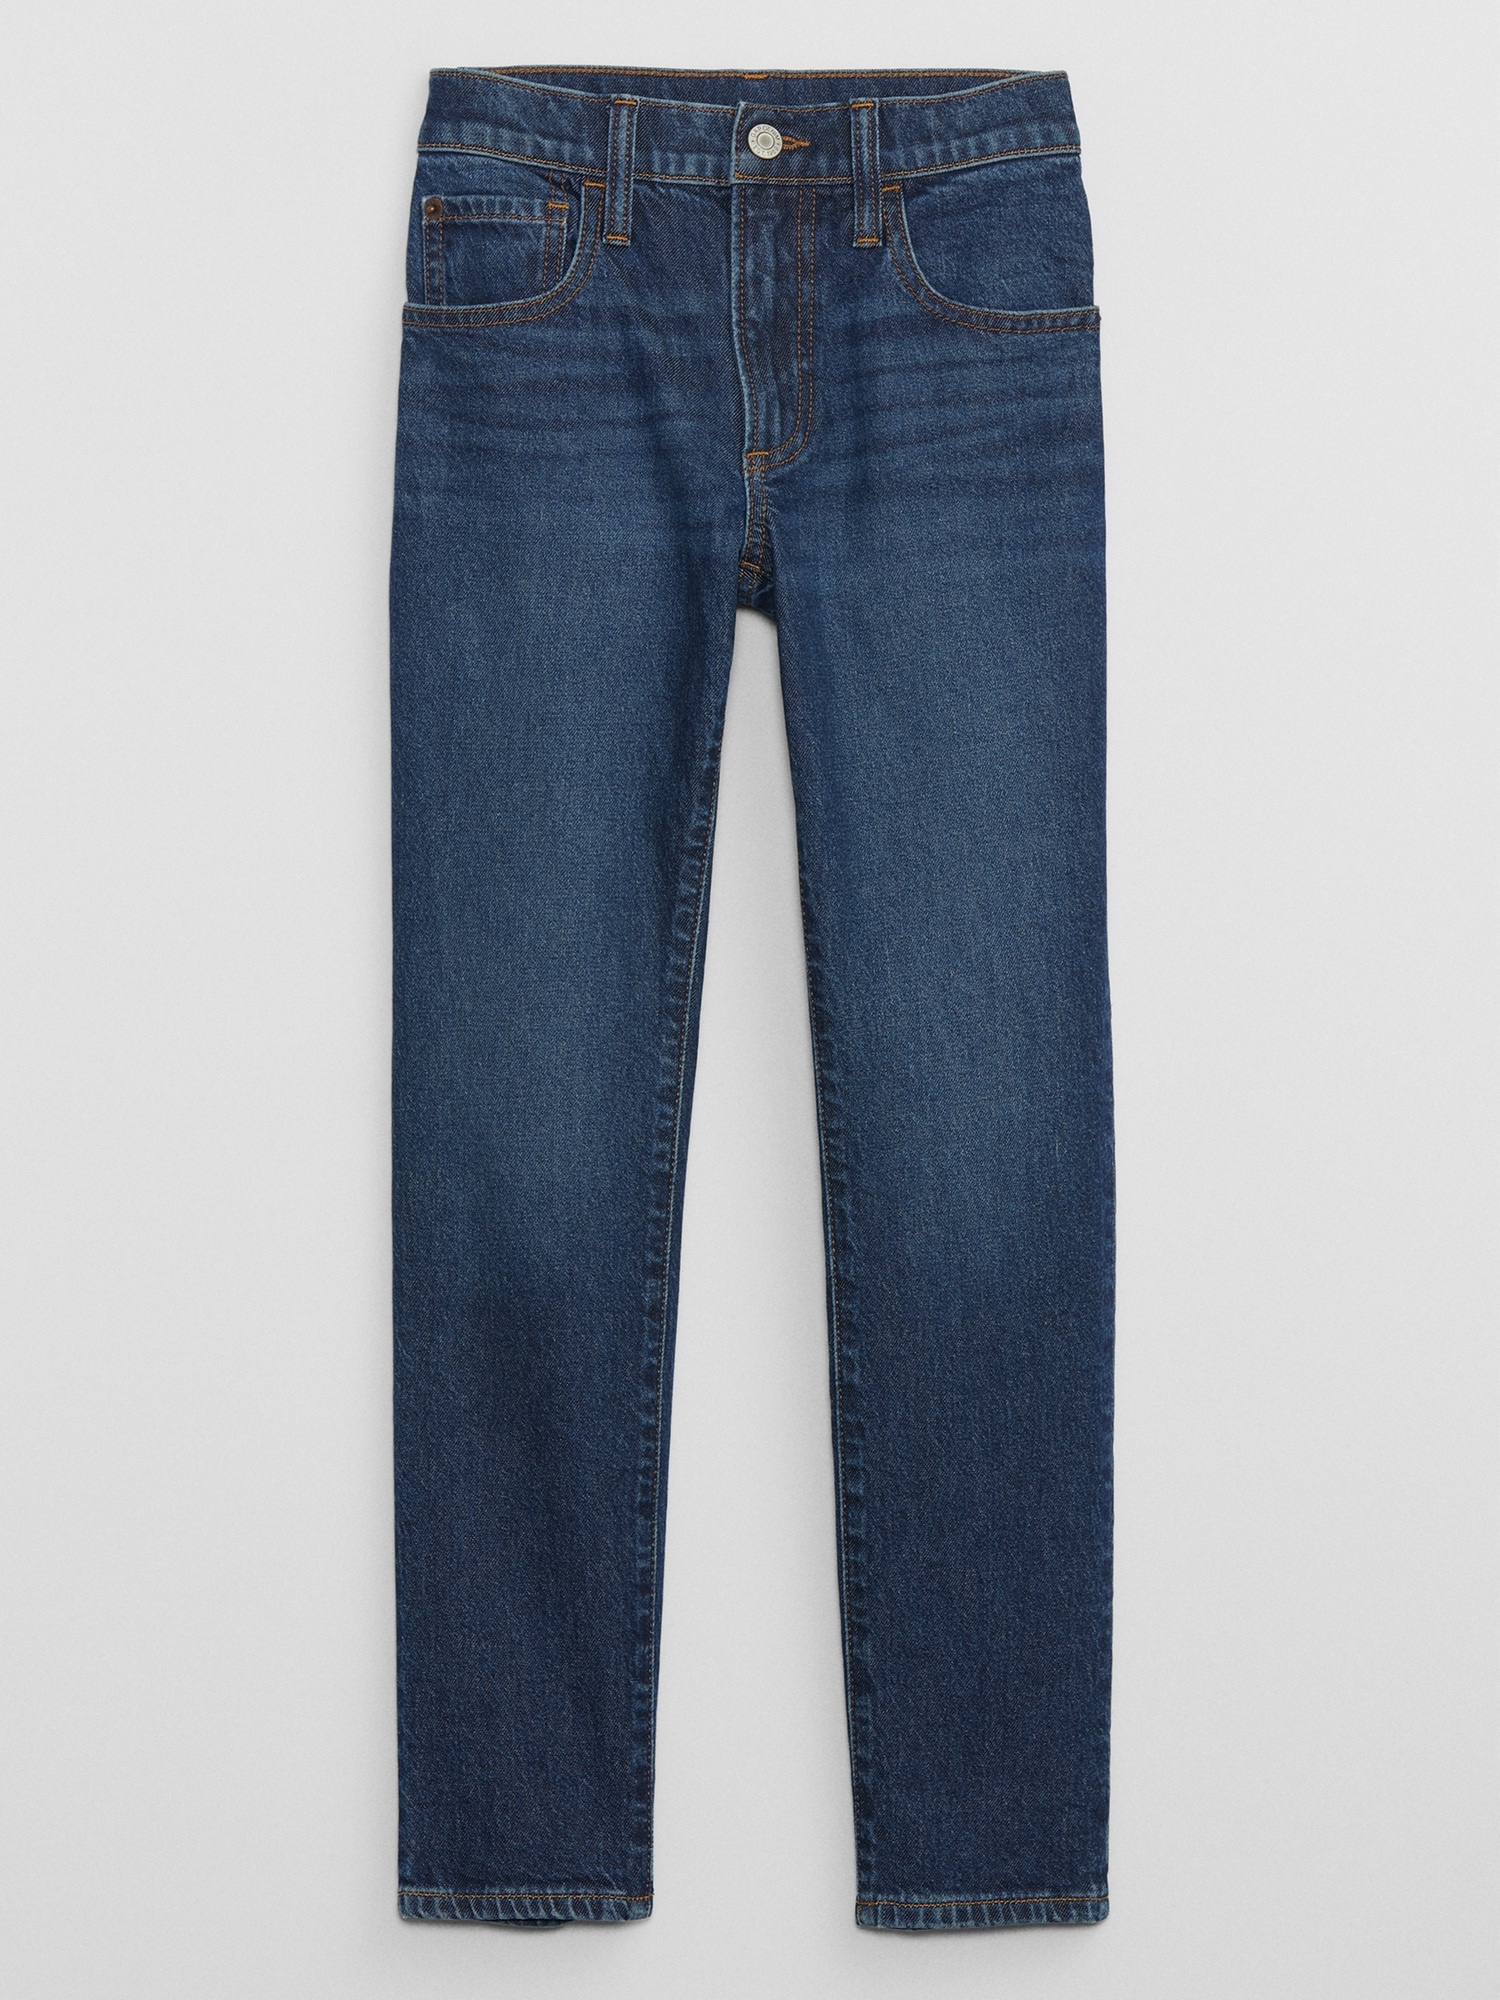 Kids Slim Taper Jeans | Gap Factory